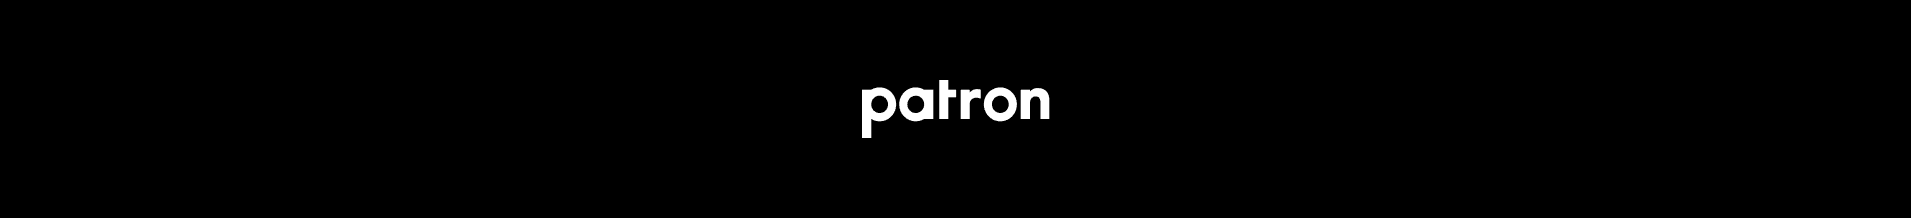 PATRON-NFT 横幅